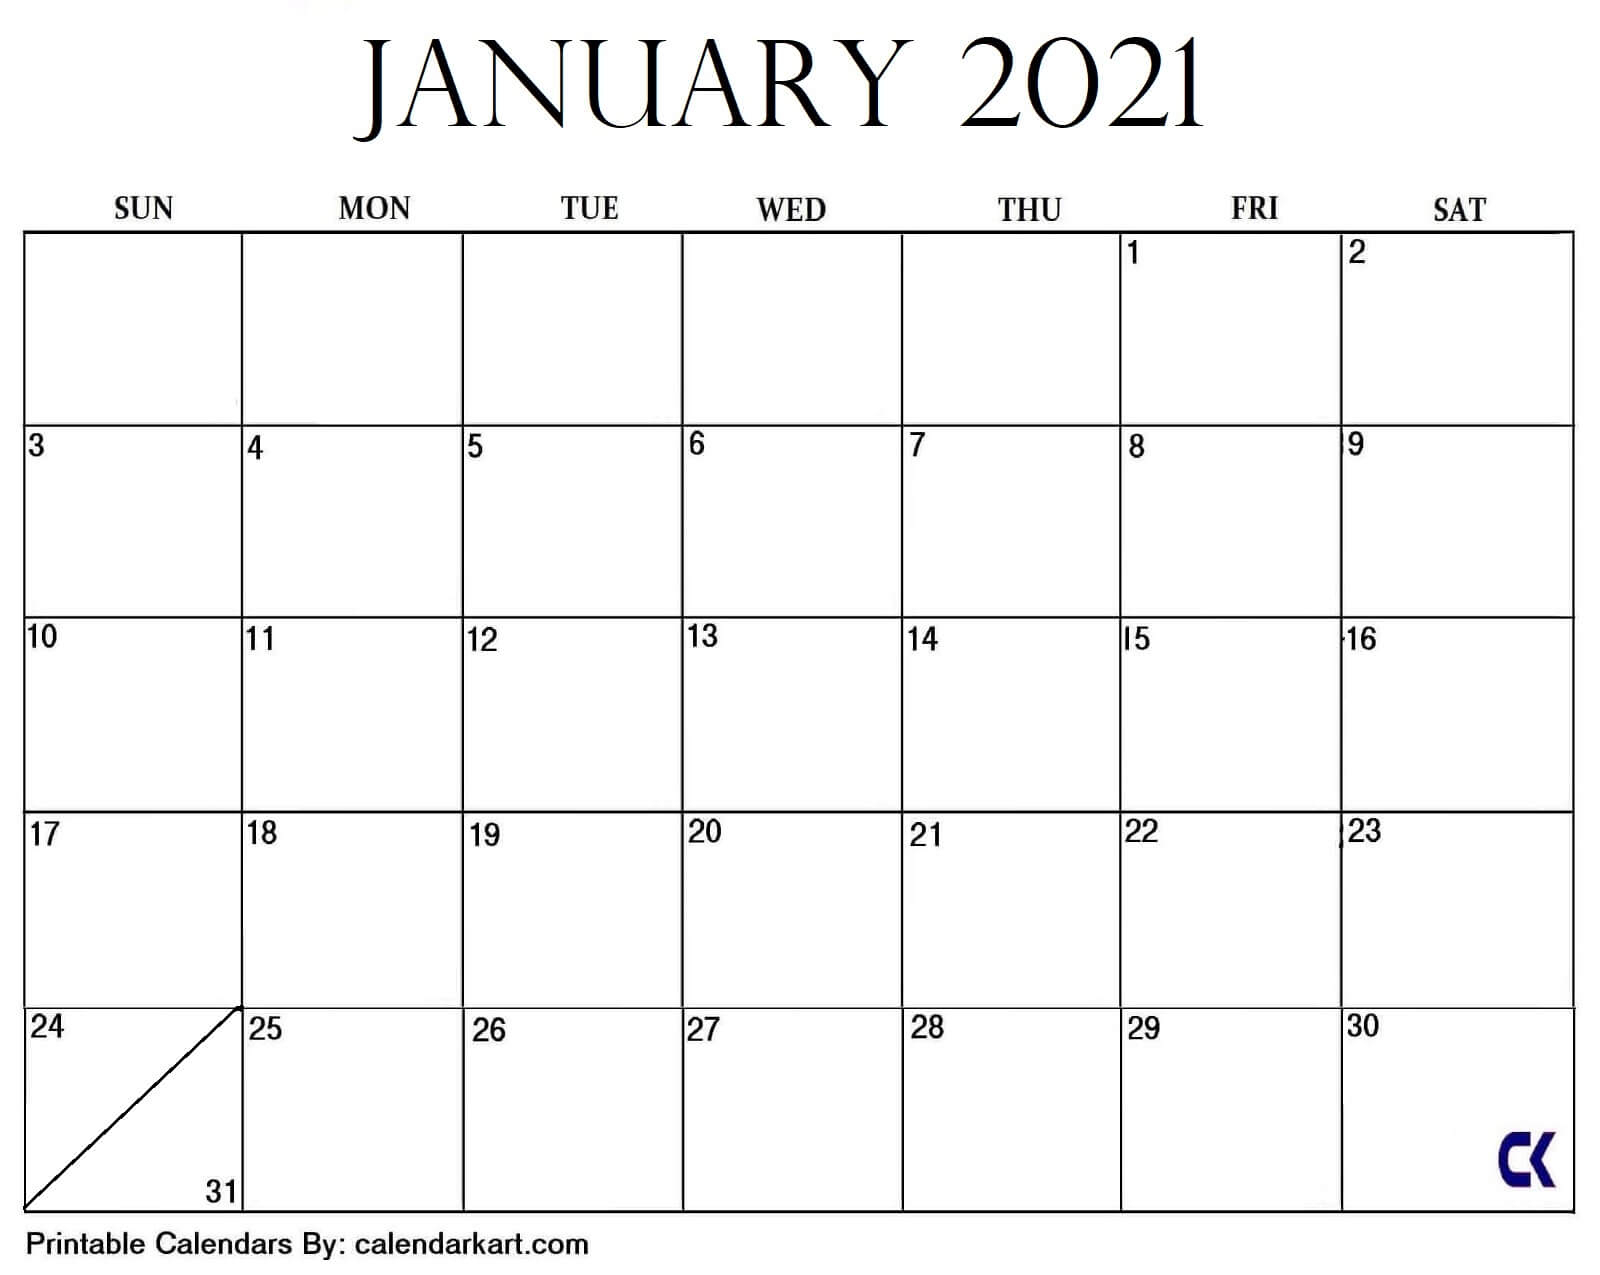 7 Cute And Stylish Free Printable January 2021 Calendar